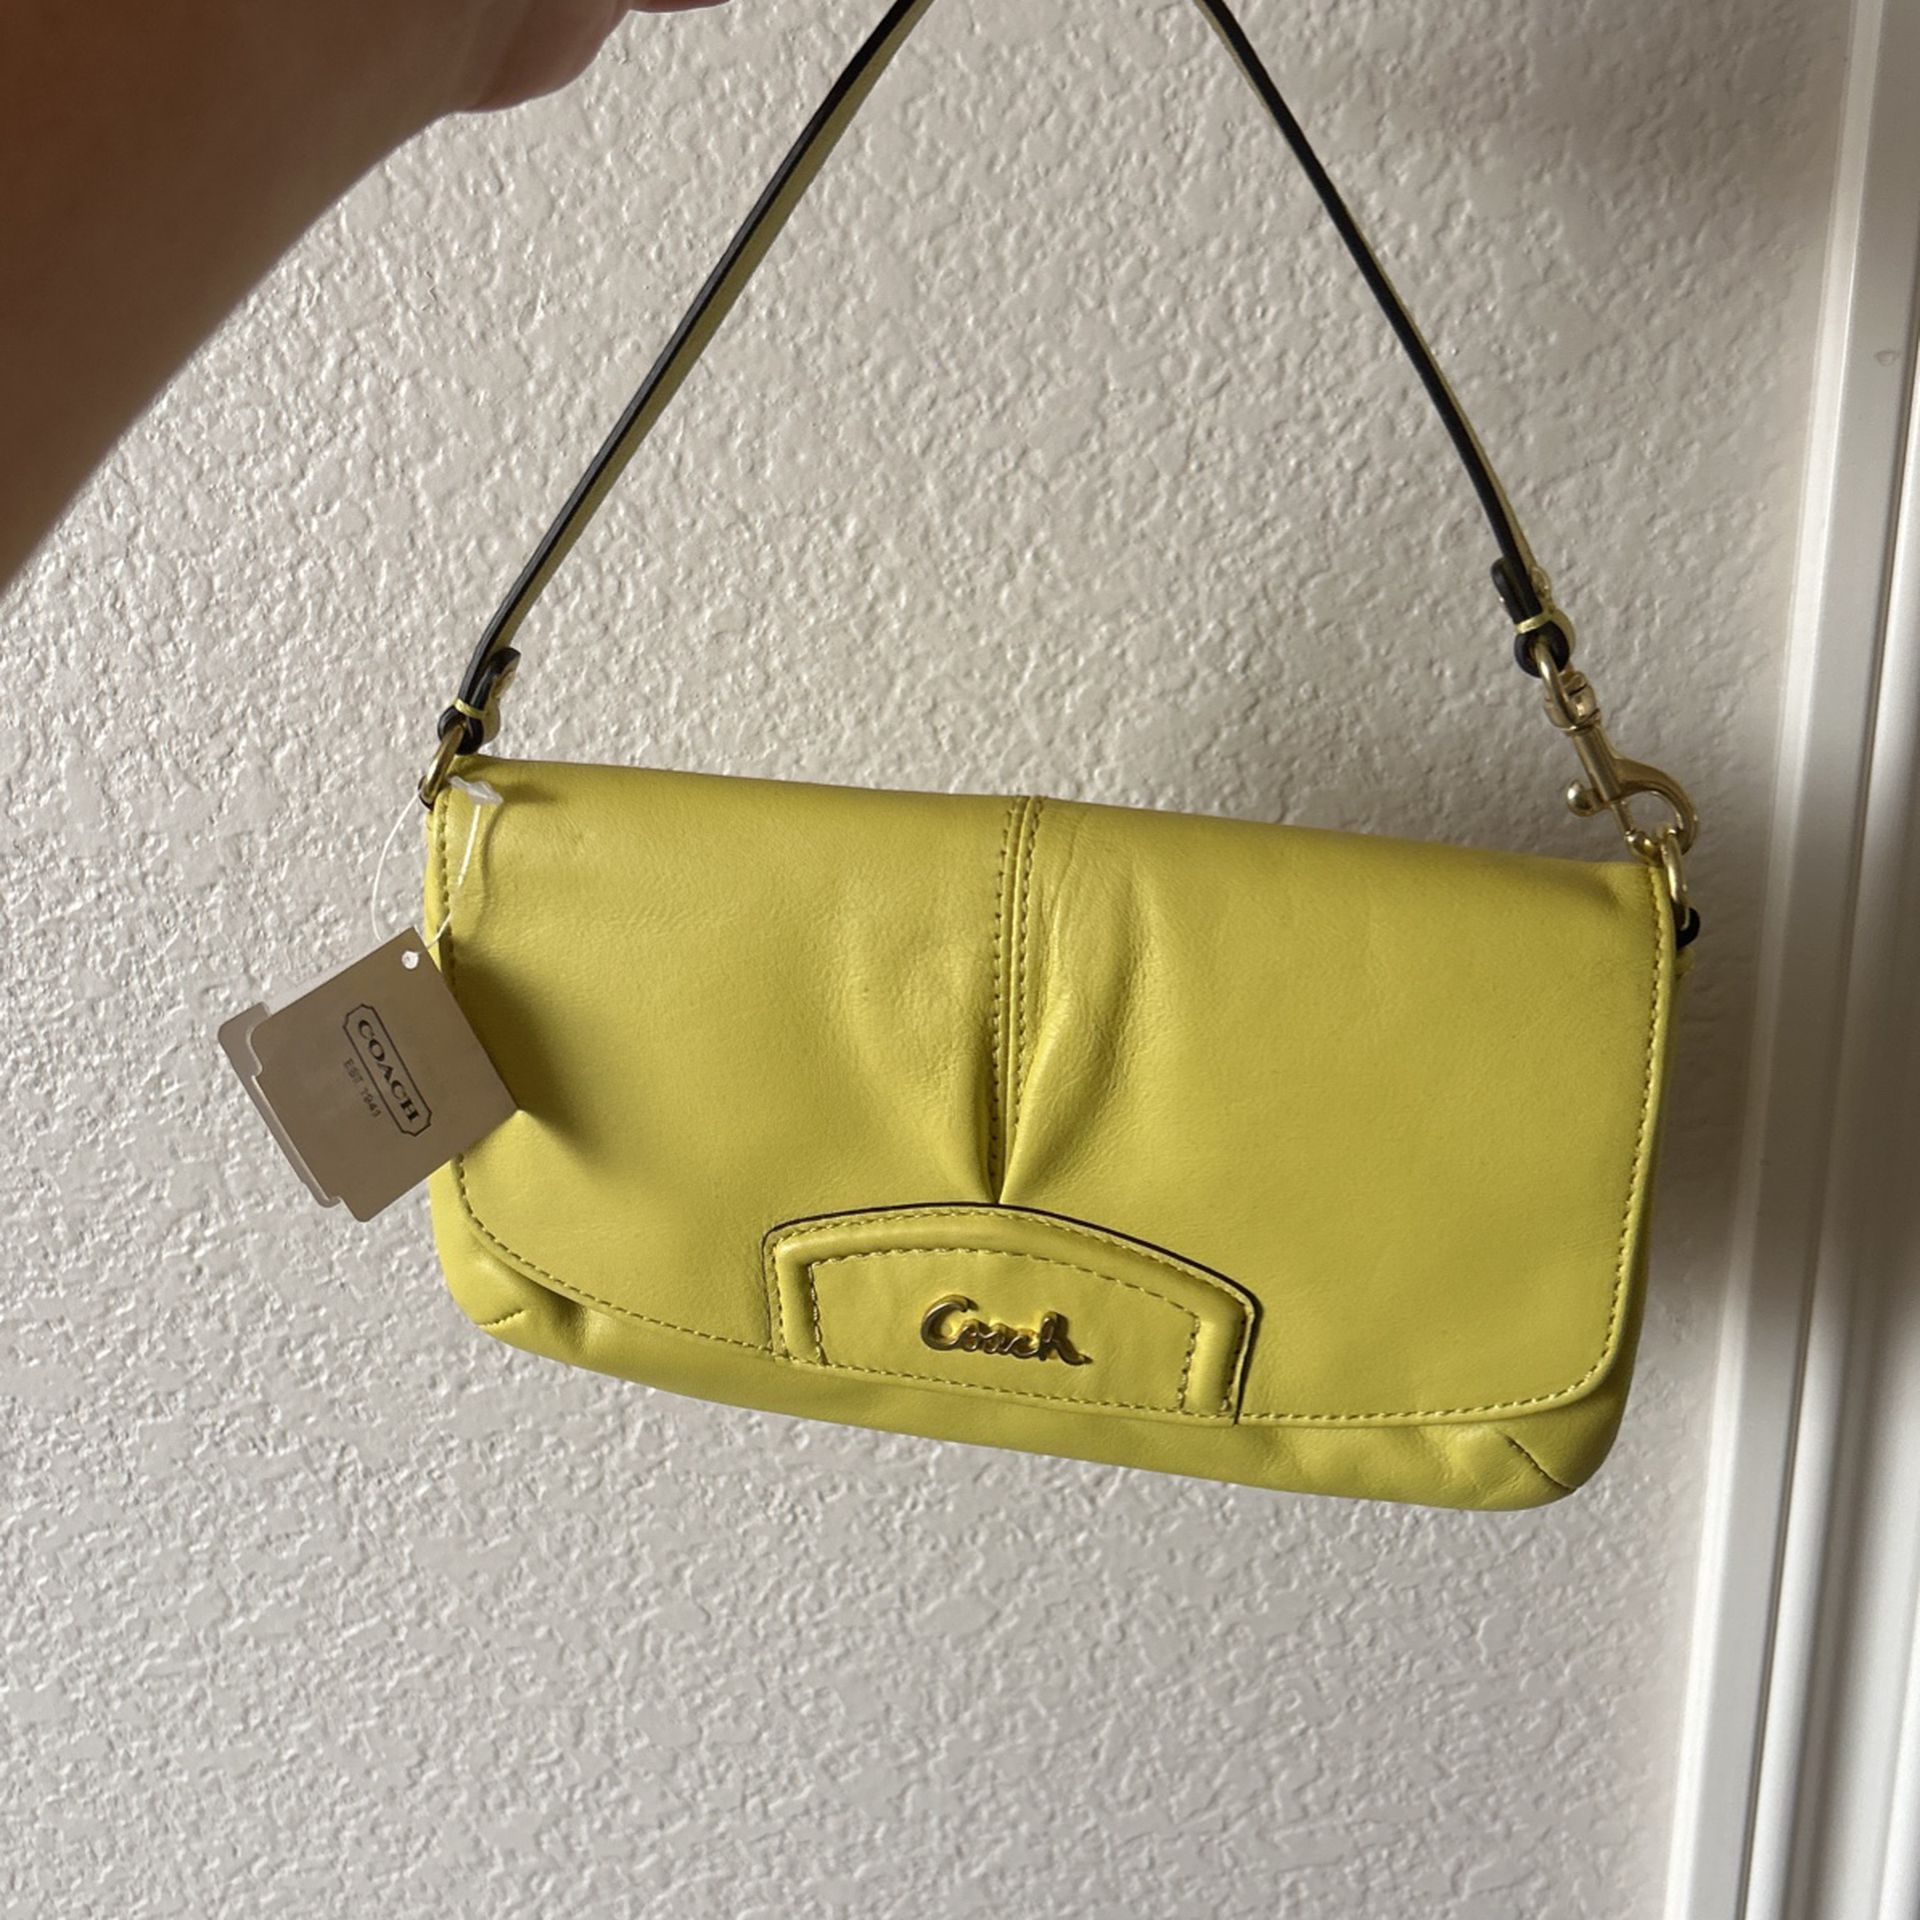 Coach mini purse